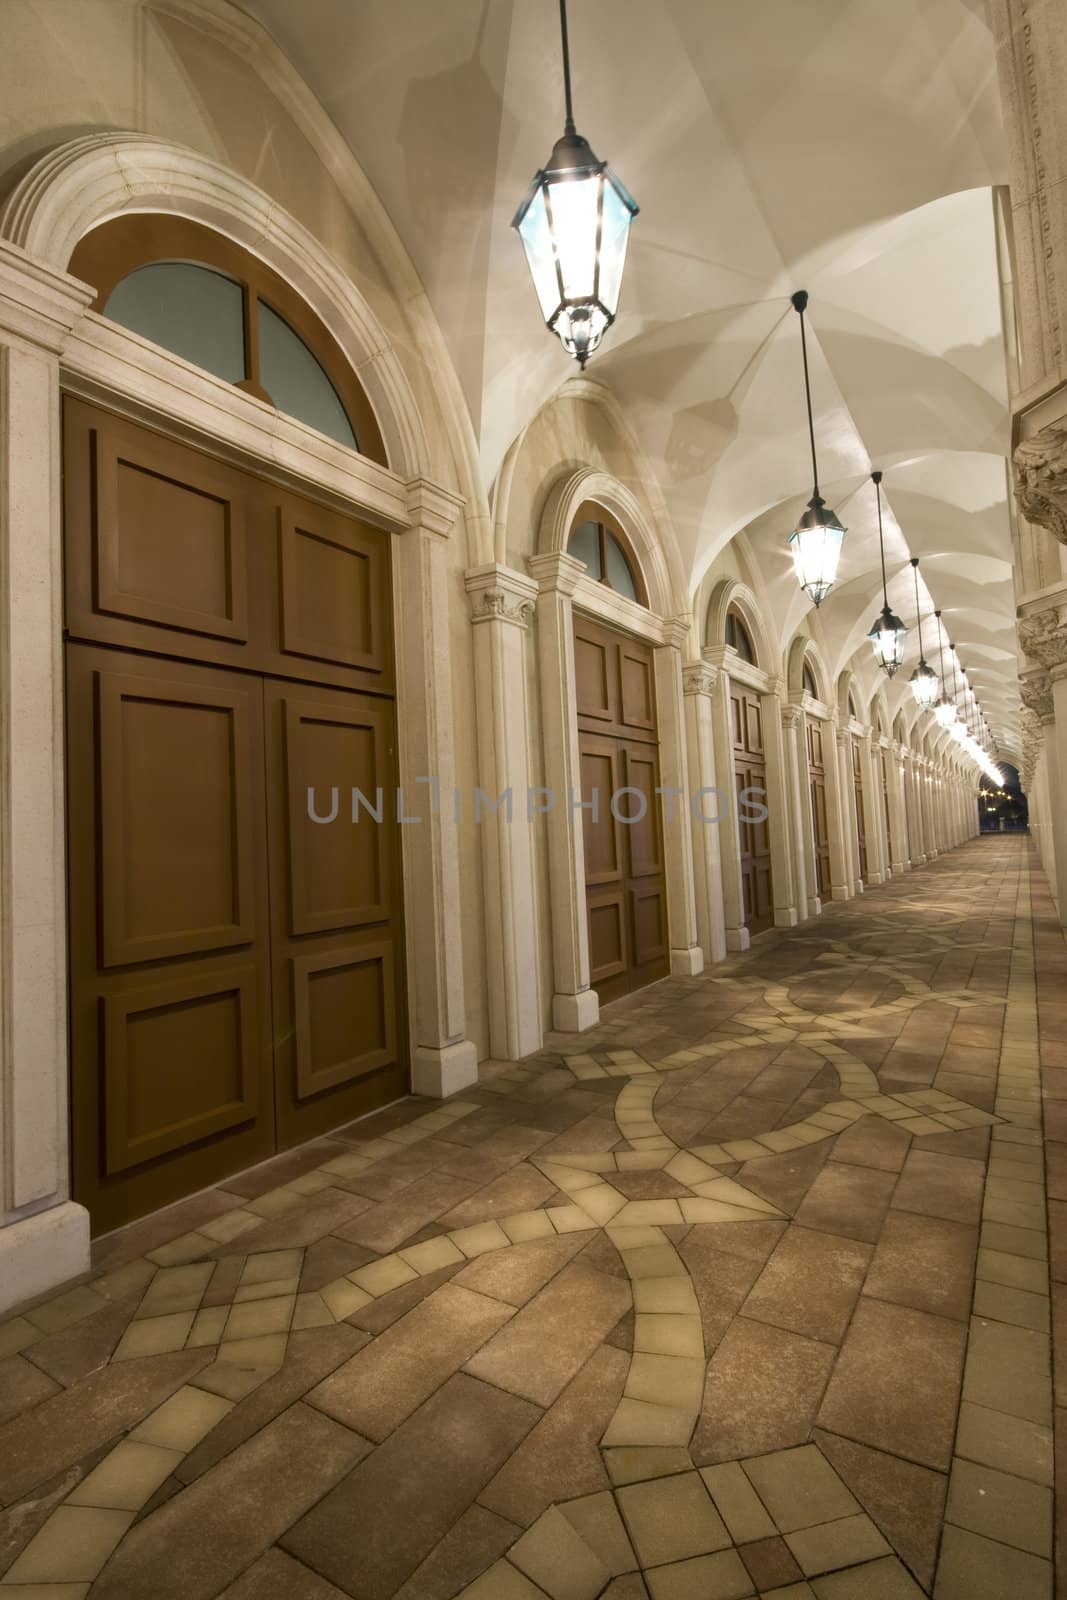 it is a corridor of europe style in macau